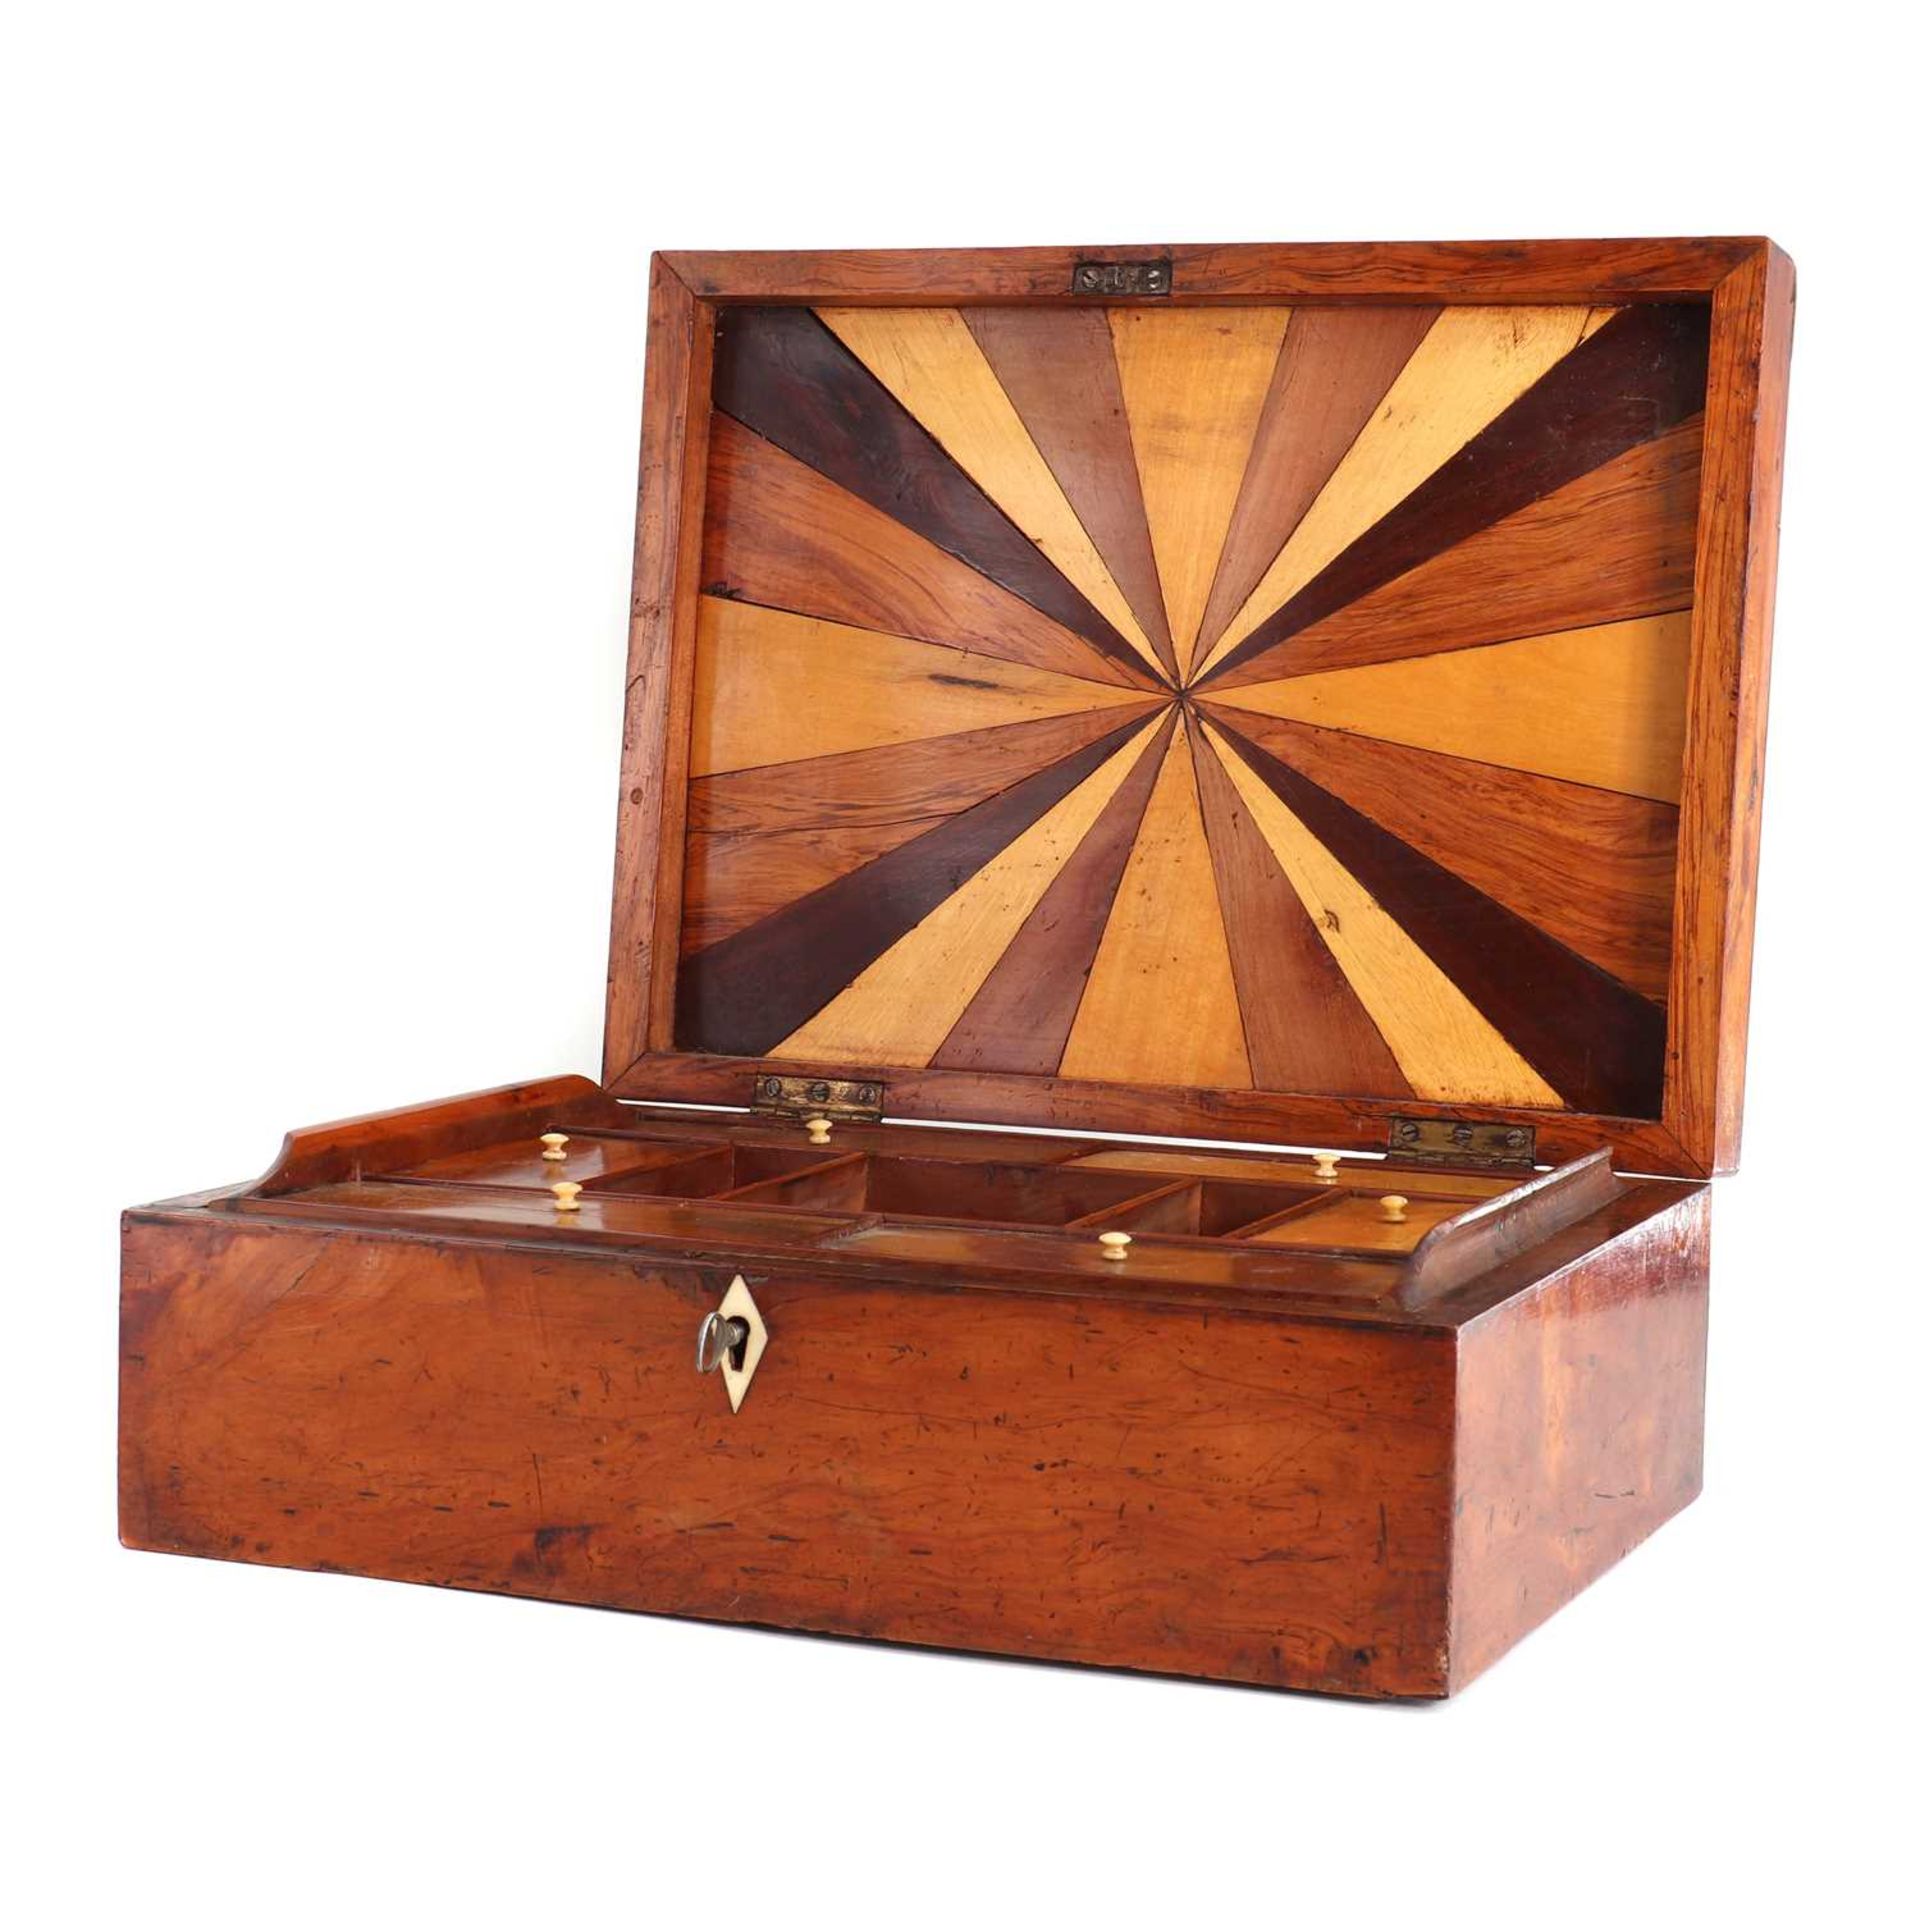 A specimen wood sewing box,